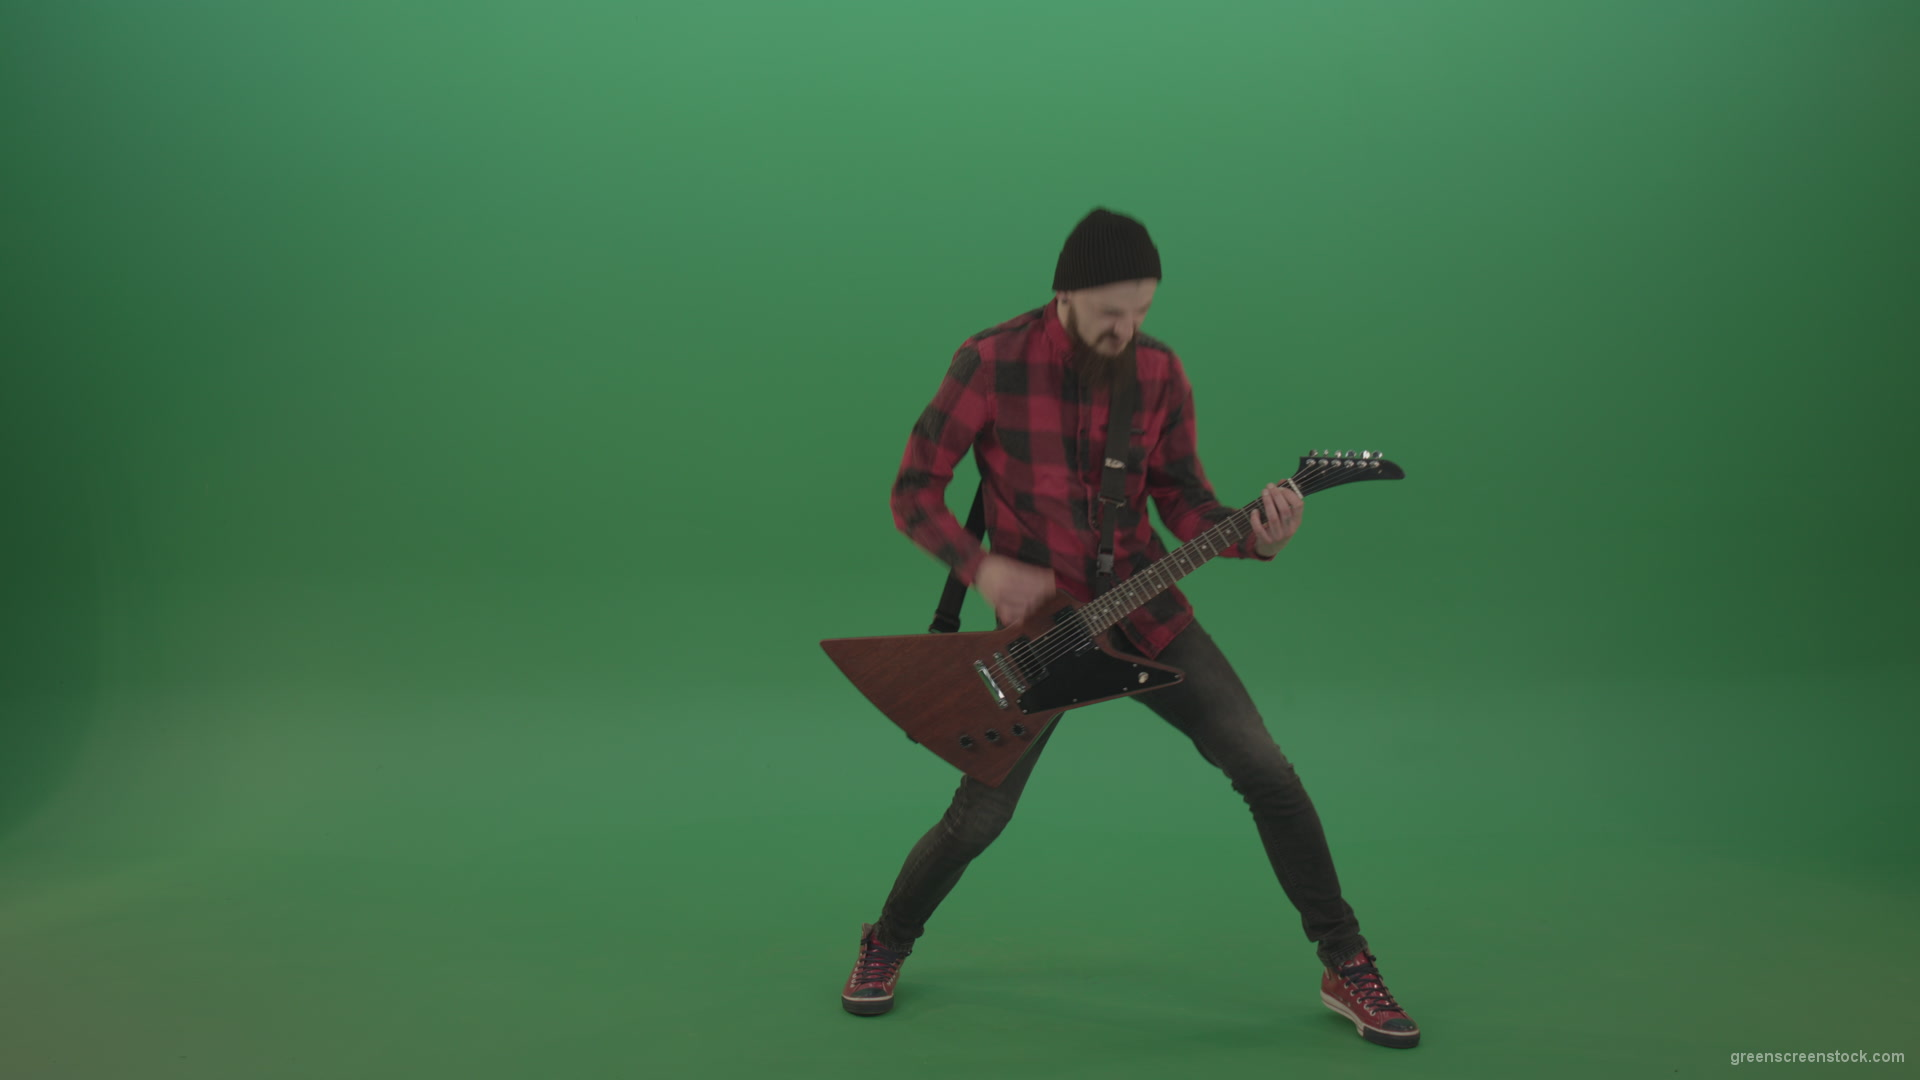 Full-size-Green-Screen-Musician-Rock-Guitarist-man-in-red-shirt-play-guitar-on-green-screen_009 Green Screen Stock